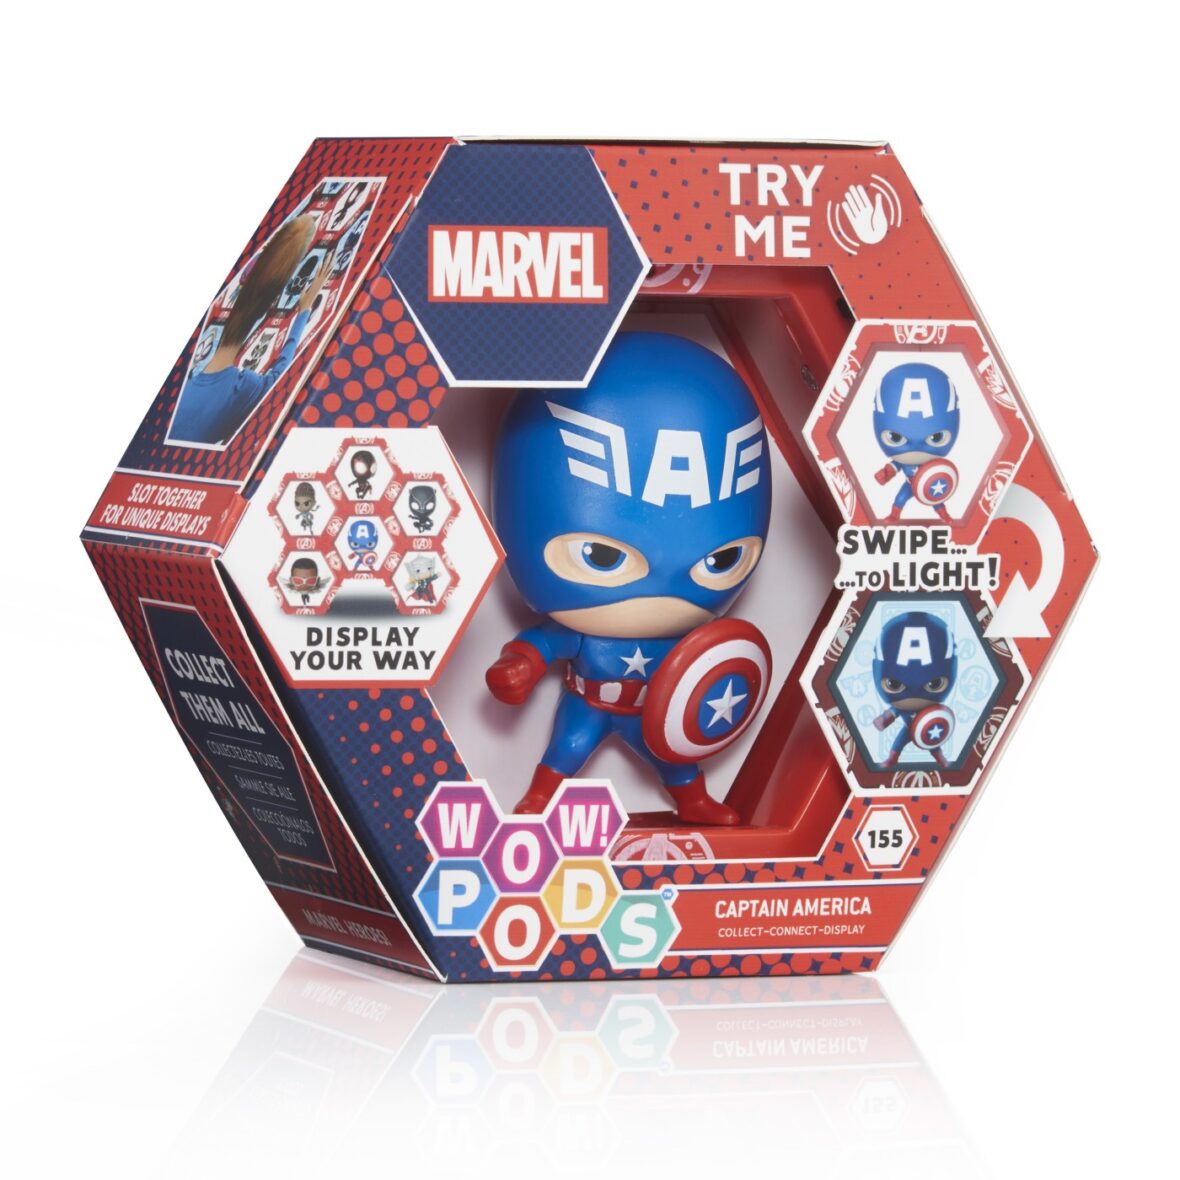 Wow! Pods – Marvel Captain America